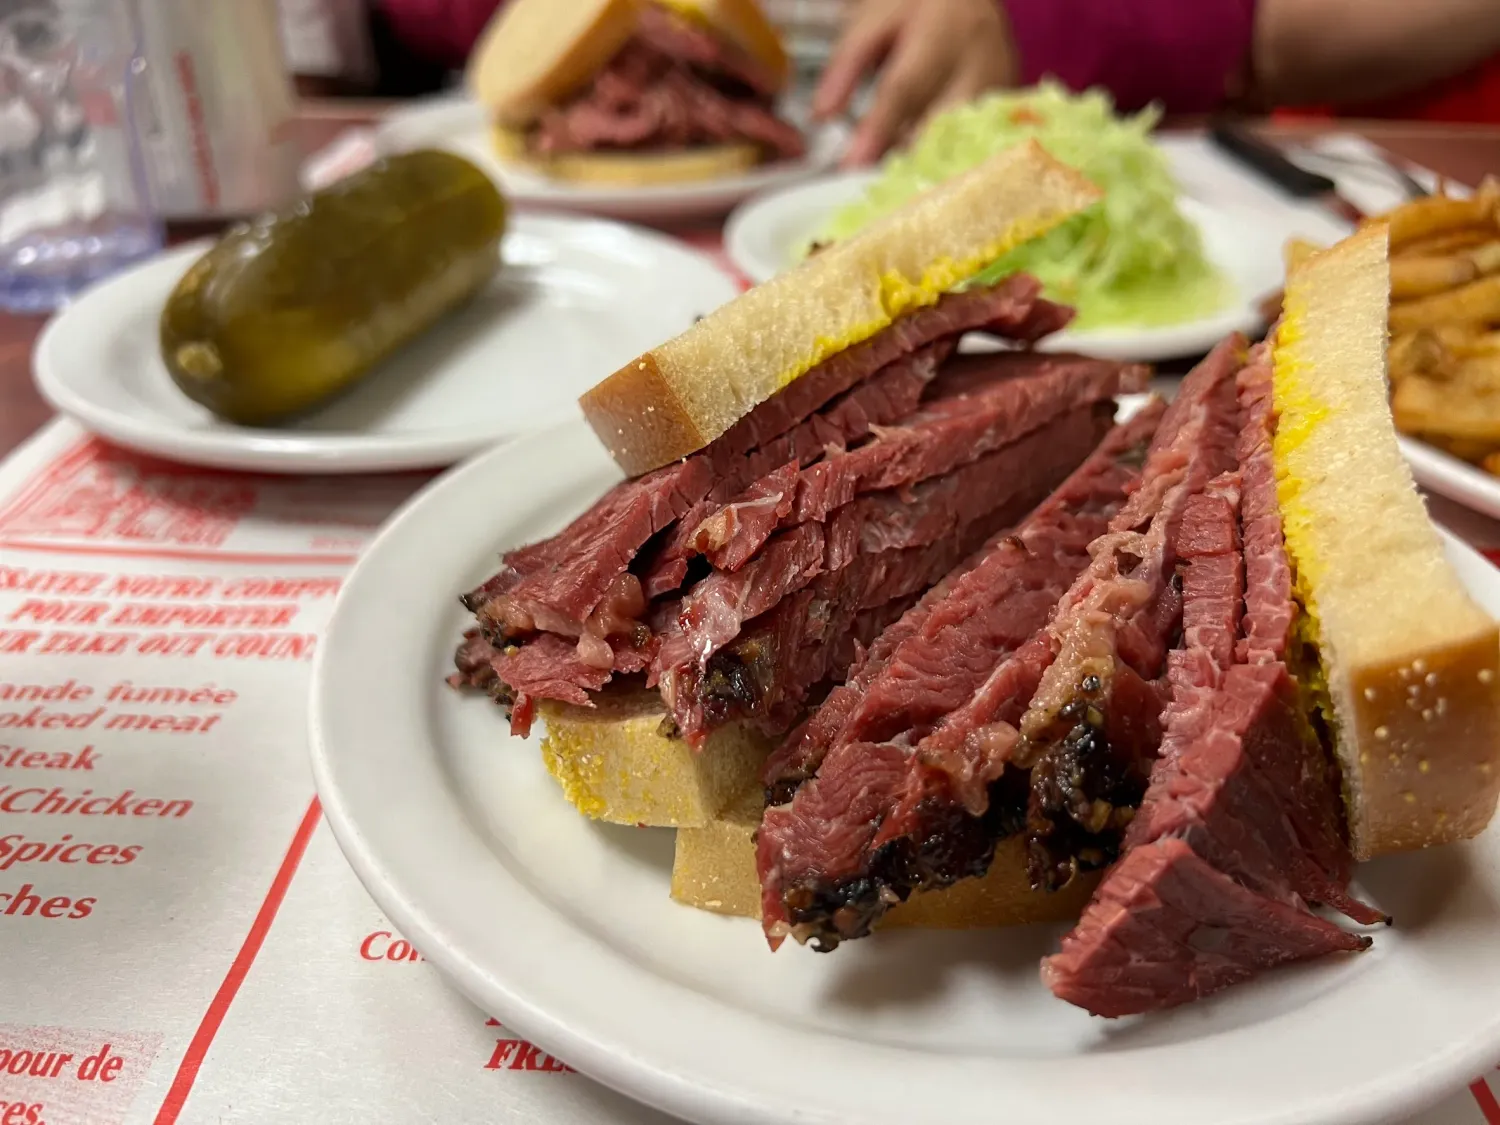 Smoked Meat sandwich at Schwartz’s in Montréal.